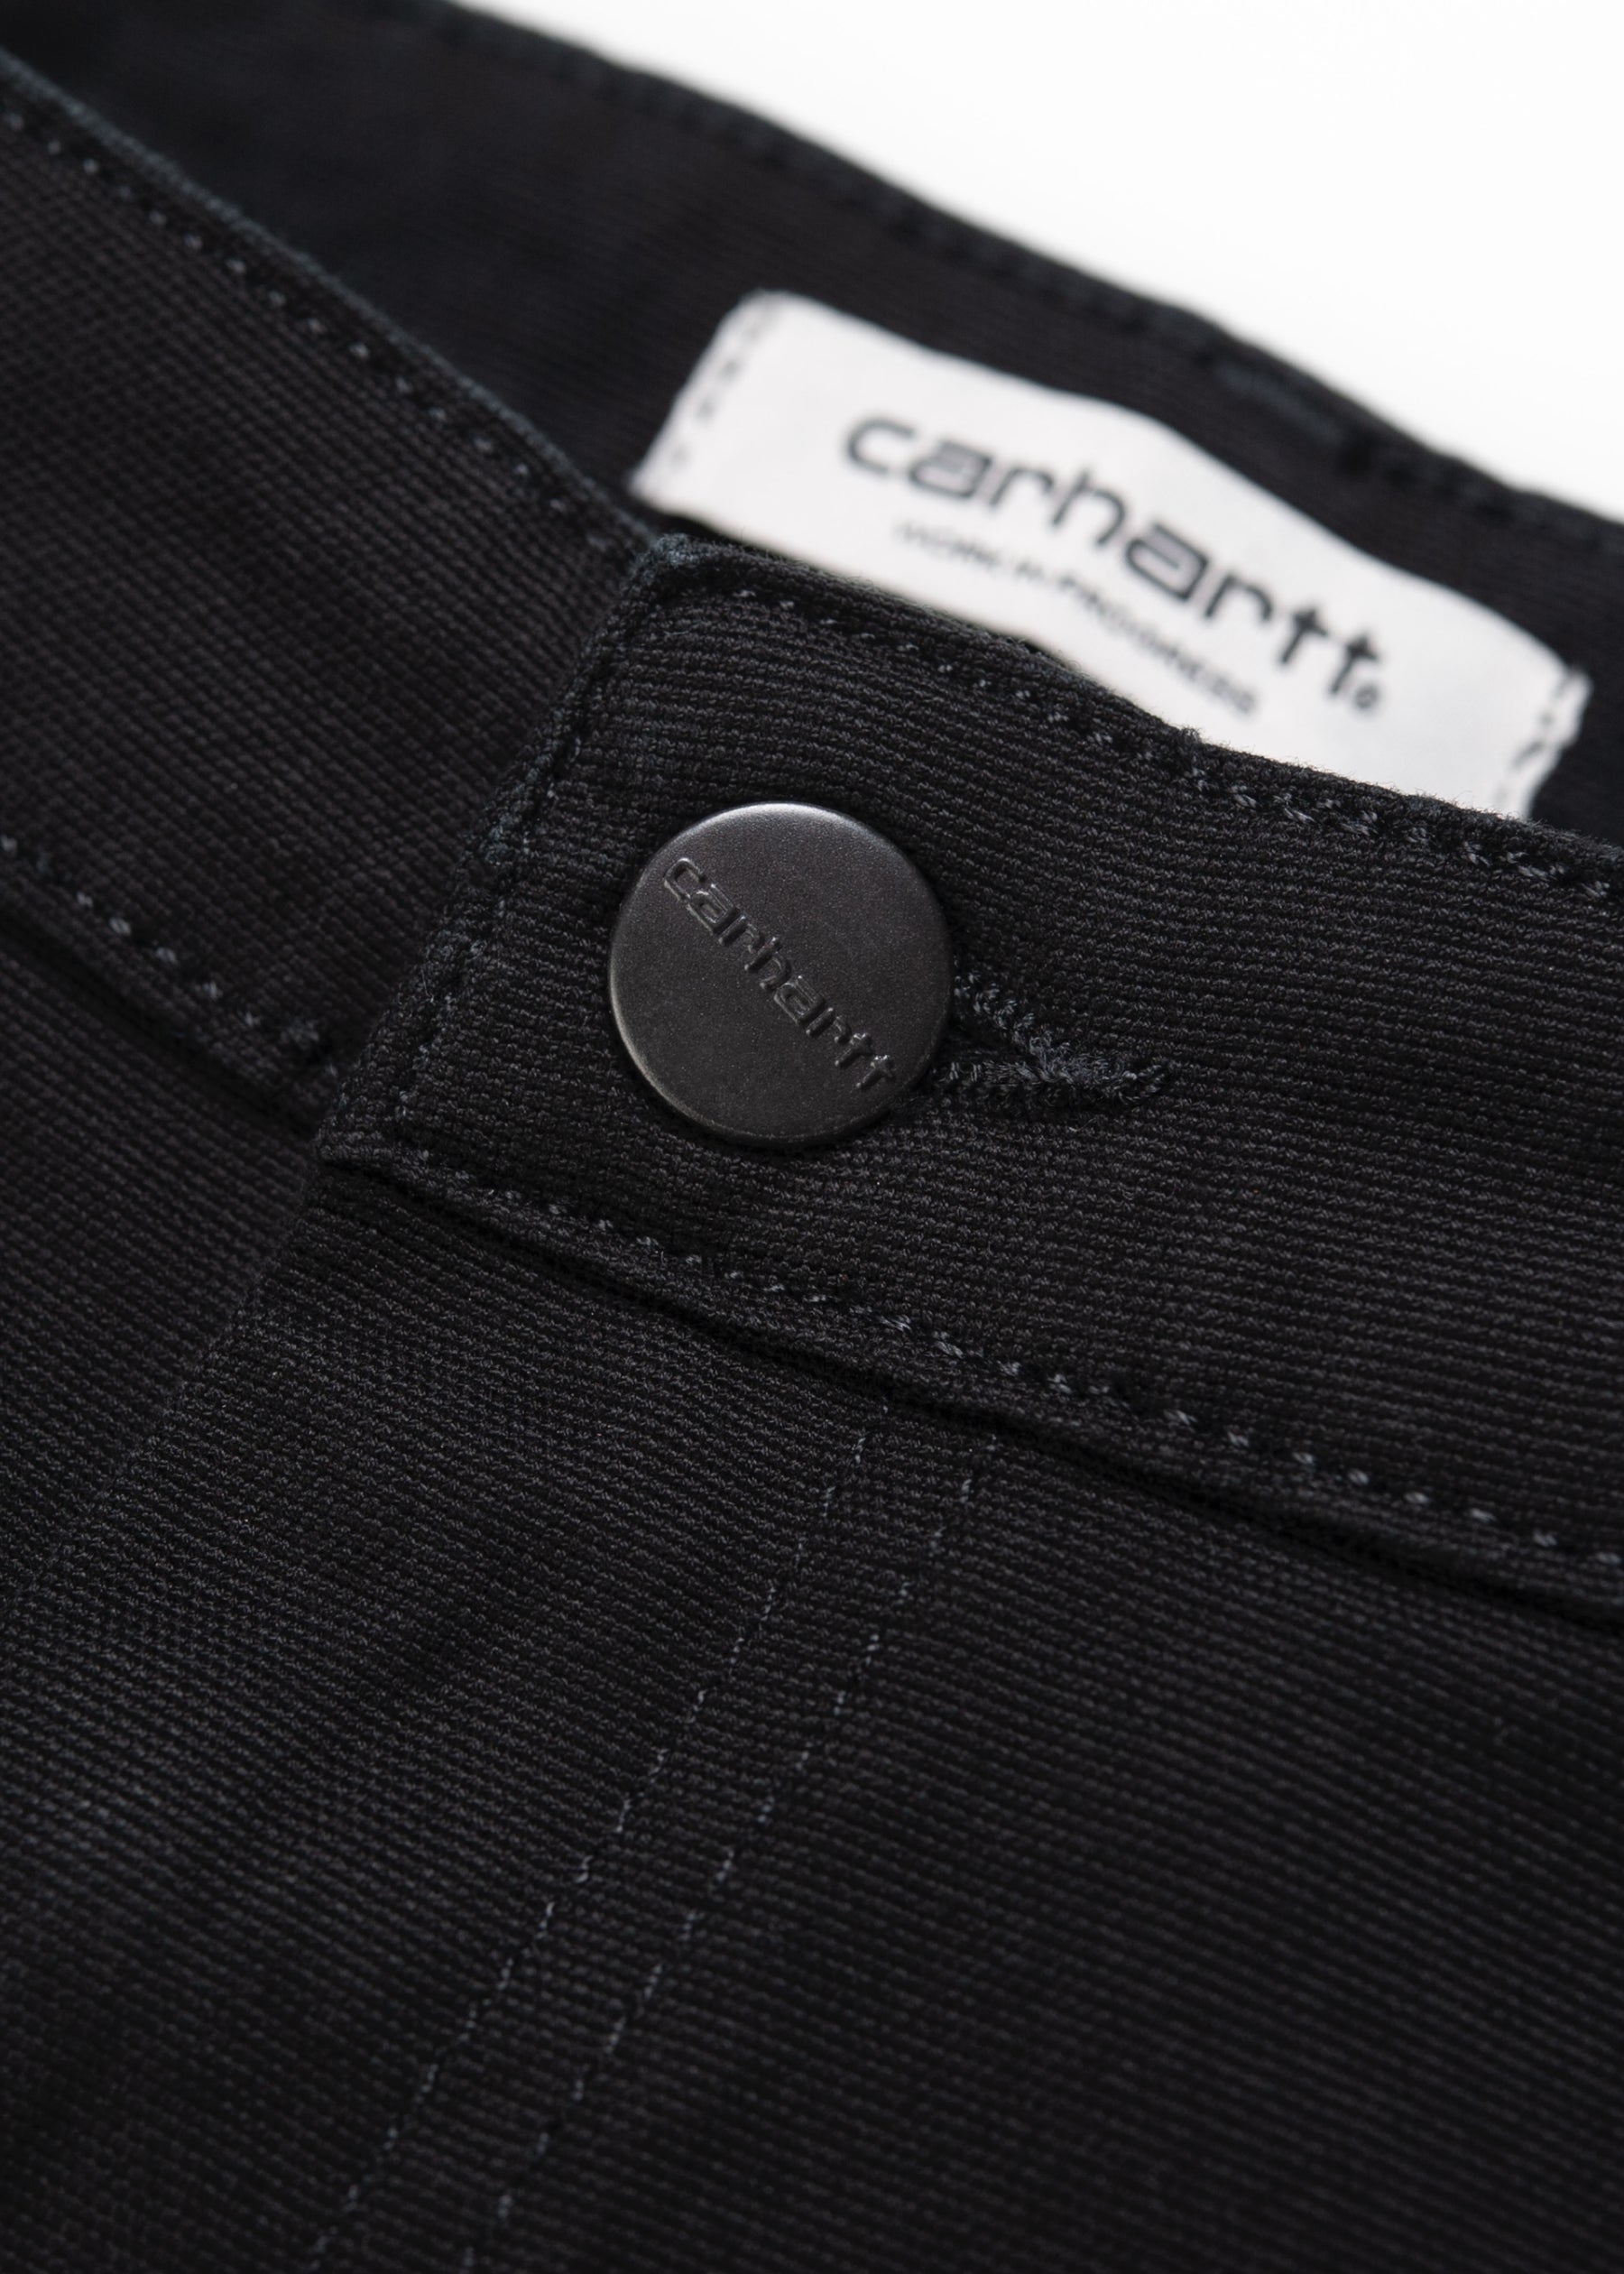 Carhartt WIP - W' Pierce Pant - Black Rinsed - Hardpressed Print Studio